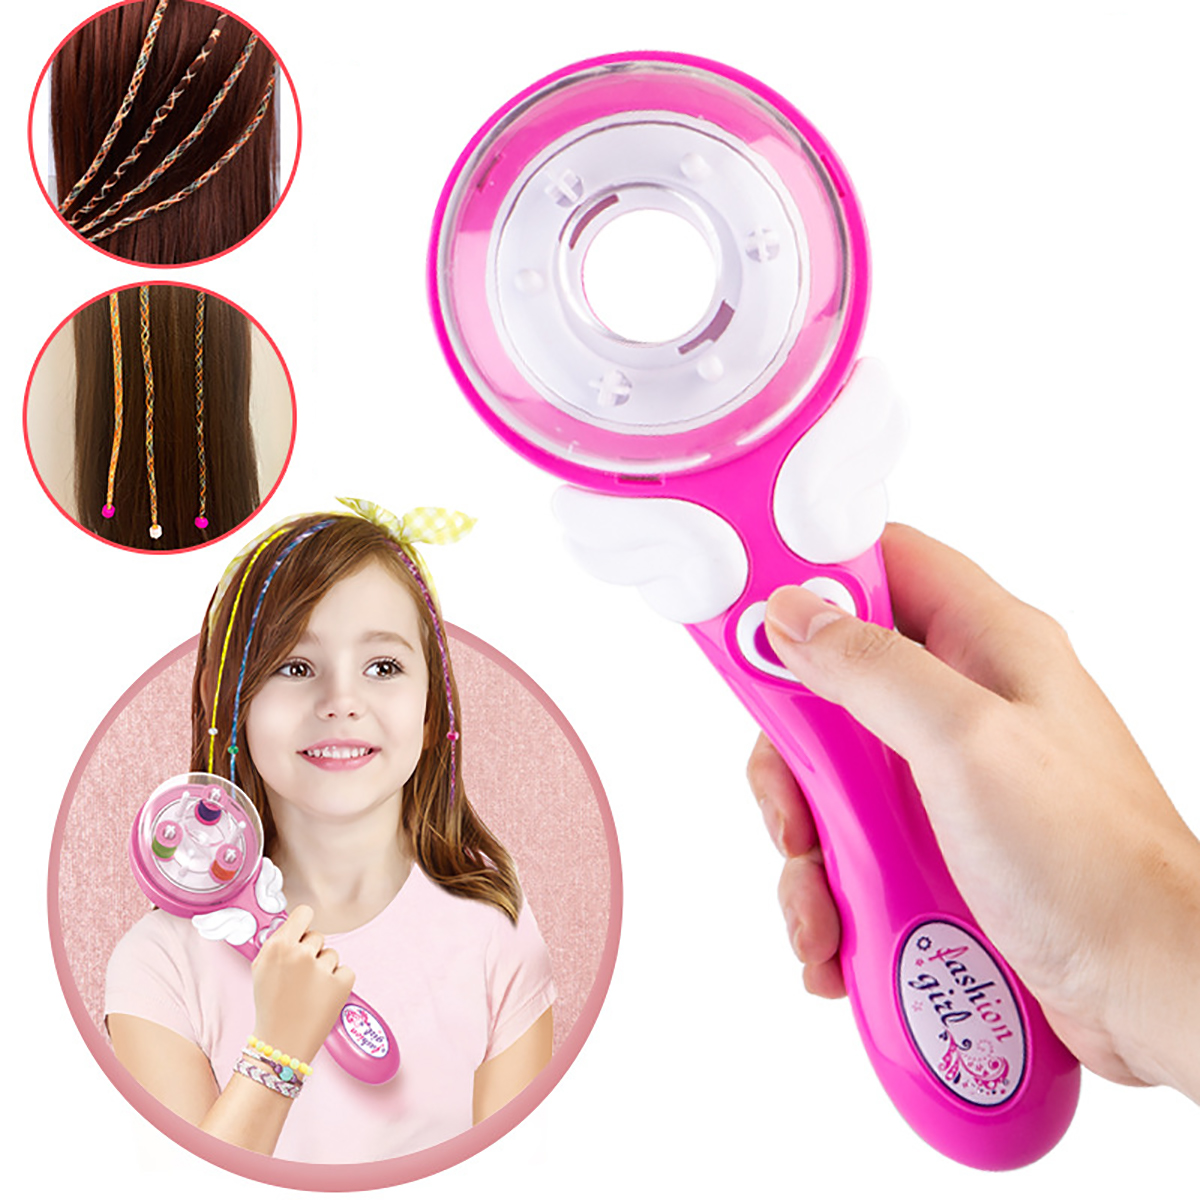 Electric-Automatic-Hair-Braider-DIY-Magic-Hair-Braiding-Machine-Hair-Styling-Toys-for-Girls-Gift-1726977-8